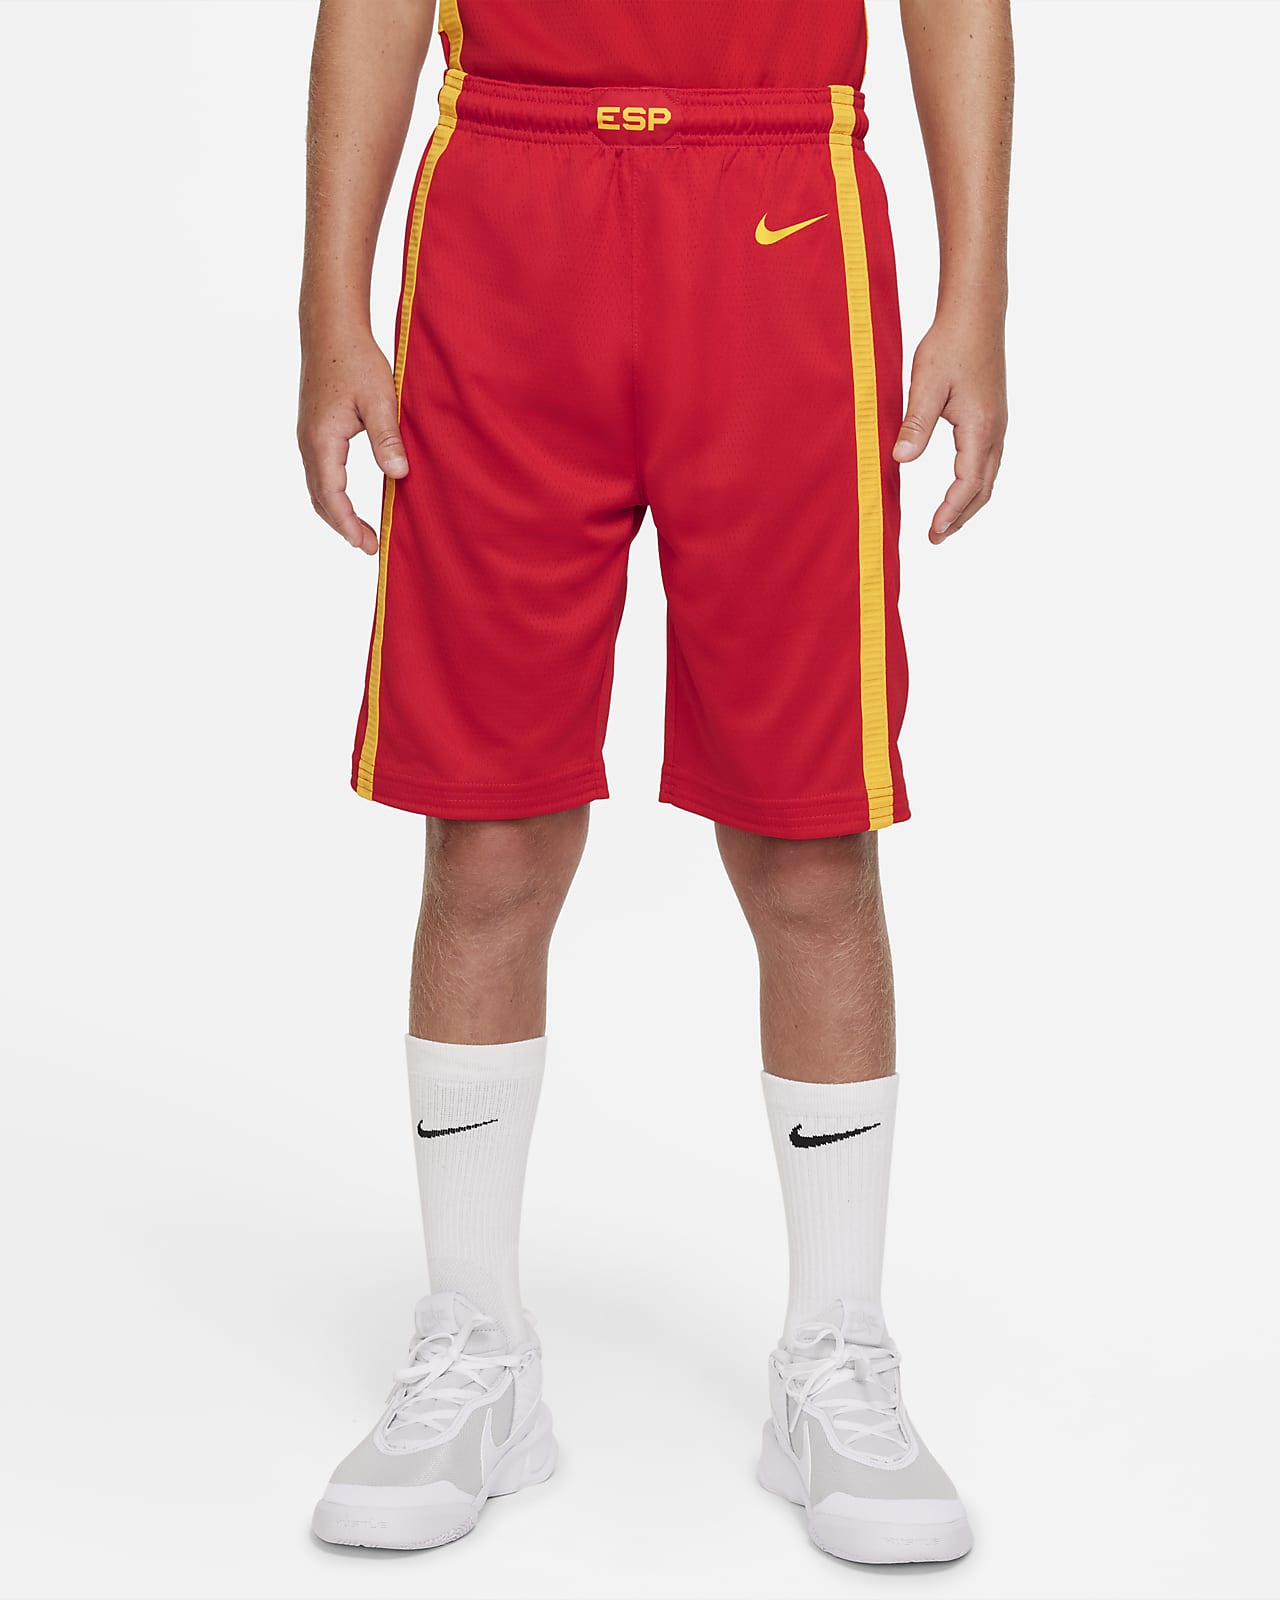 Spain (Road) Older Kids' Nike Basketball Shorts